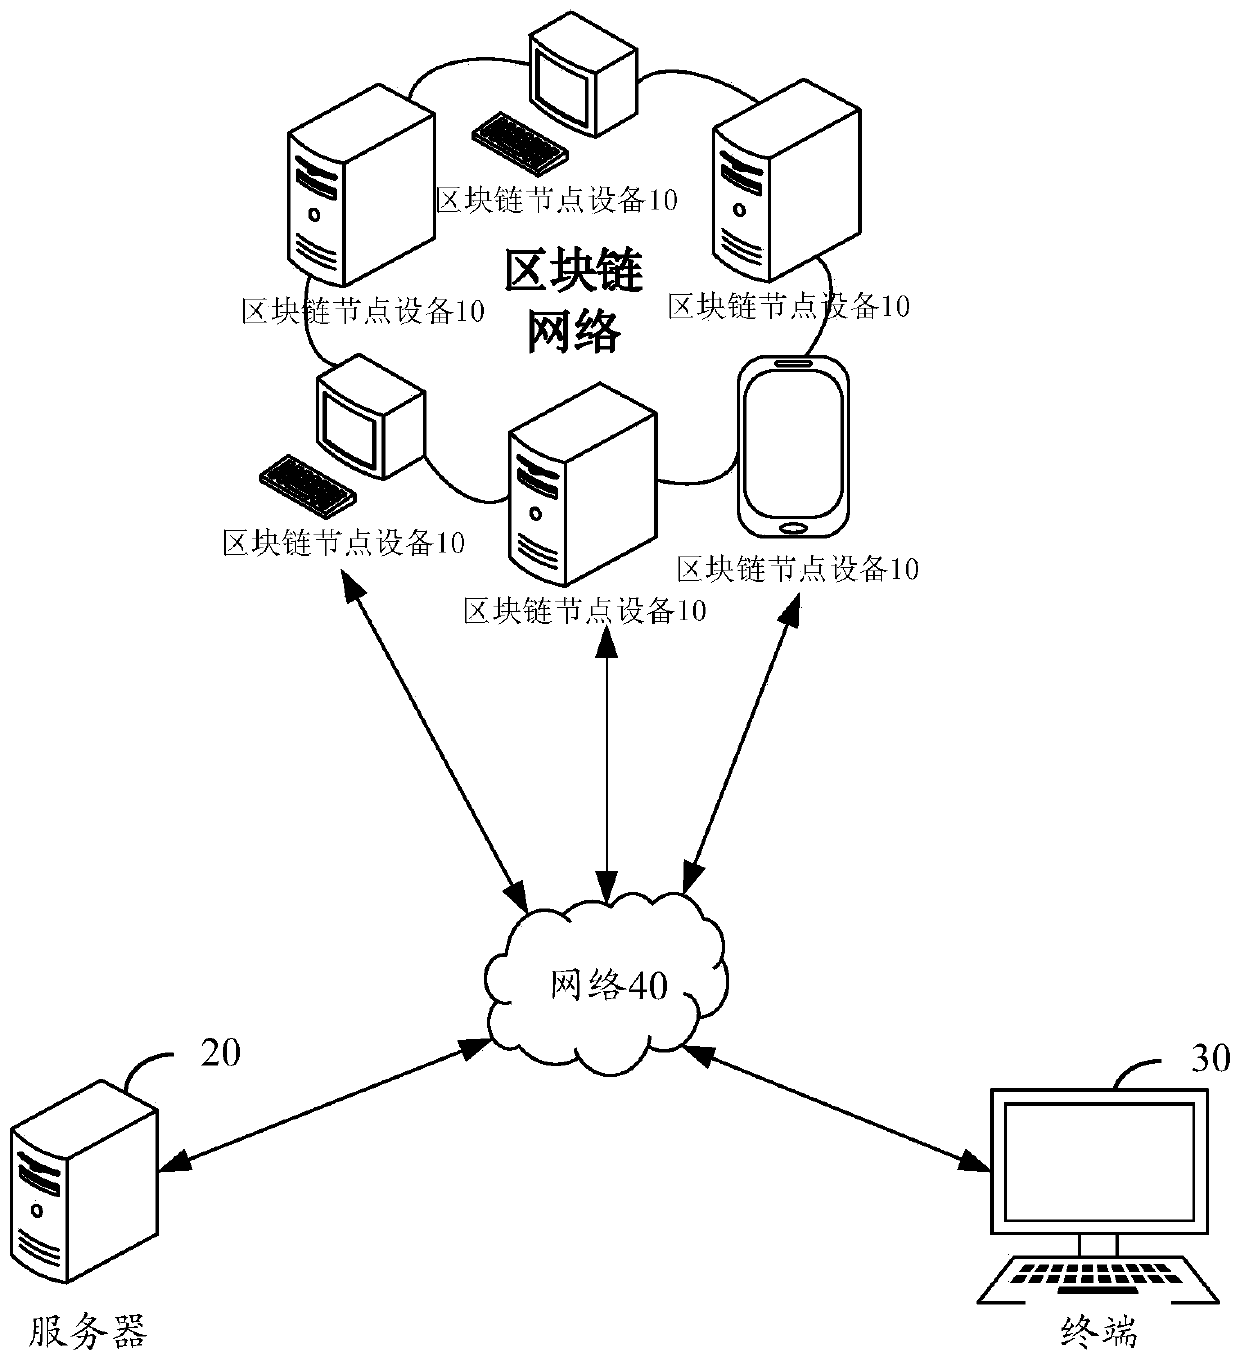 Blockchain node monitoring method, device, electronic equipment and storage medium